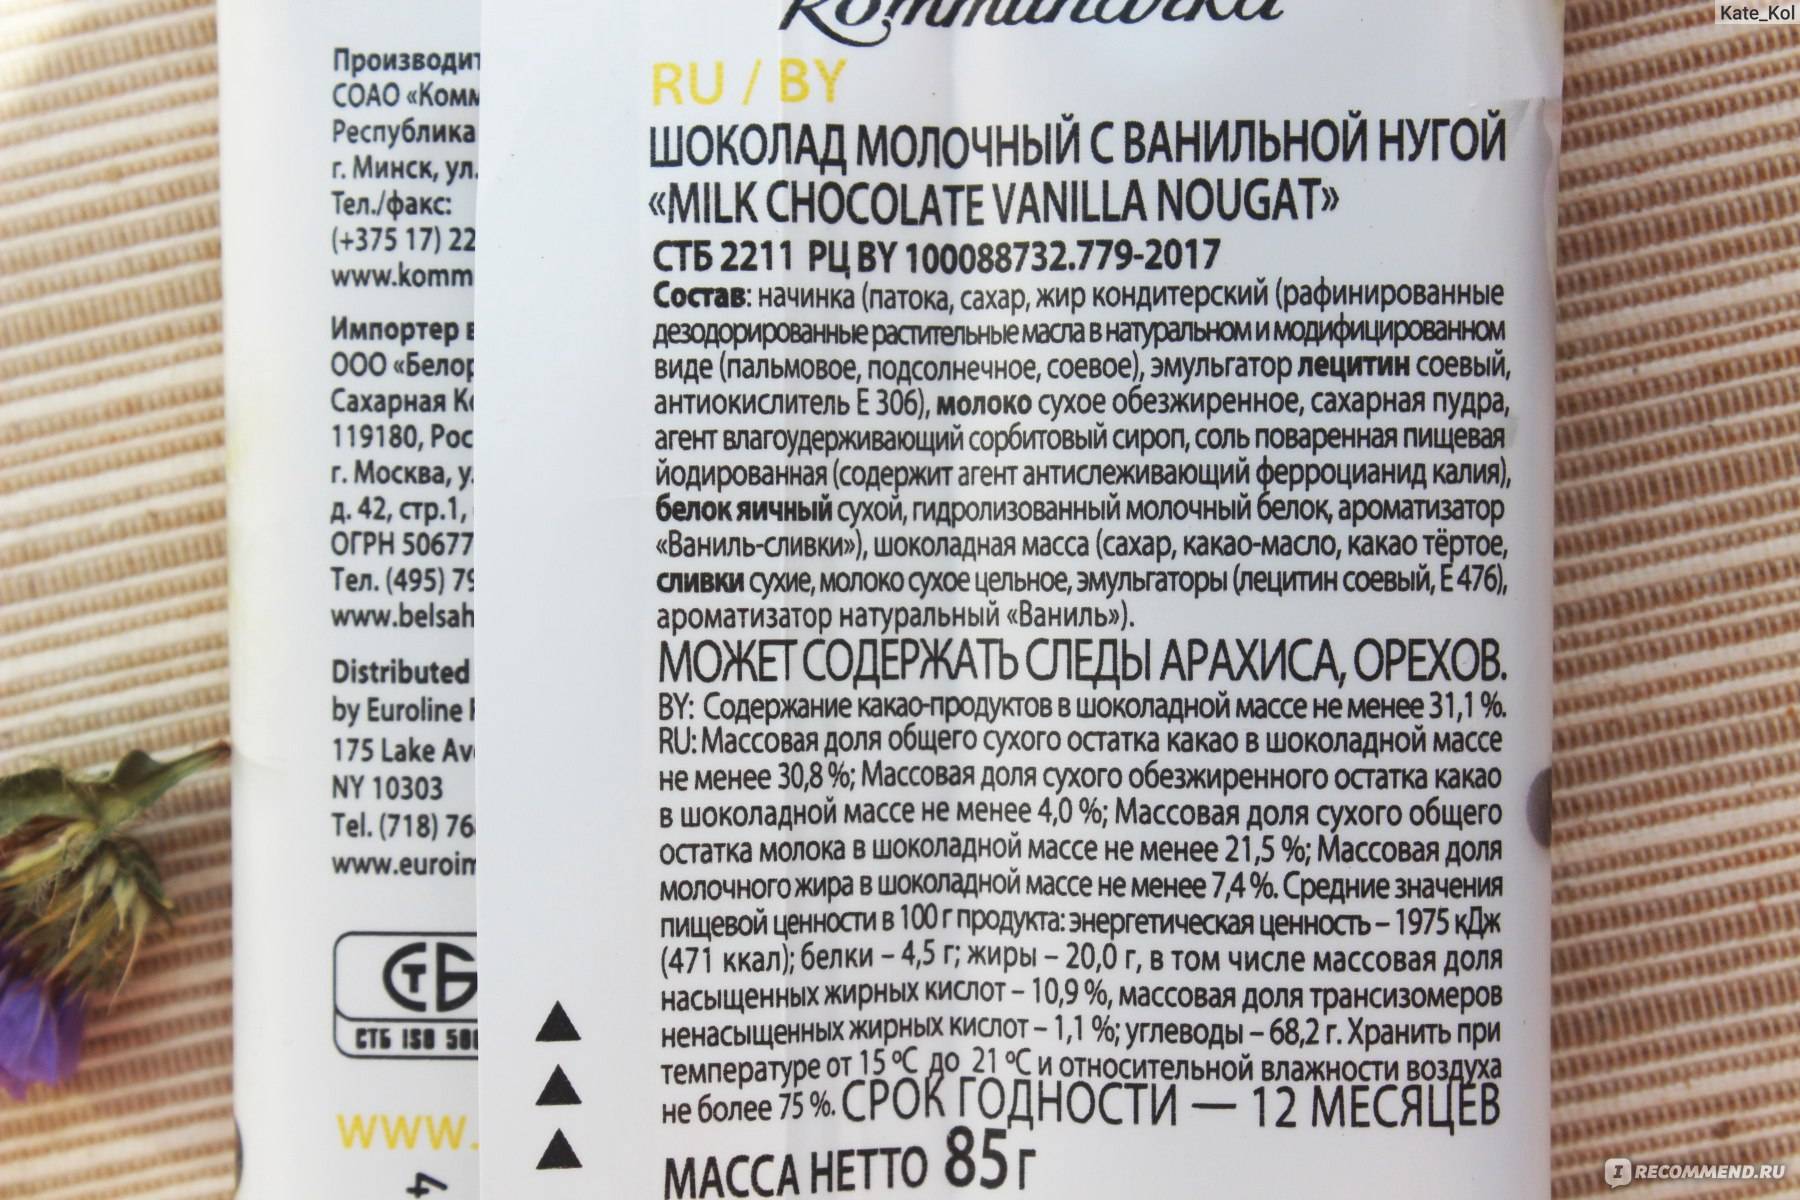 Заменители какао-масла нелауриновые - кува 300н, 500r,700 | cooks - повара казахстана